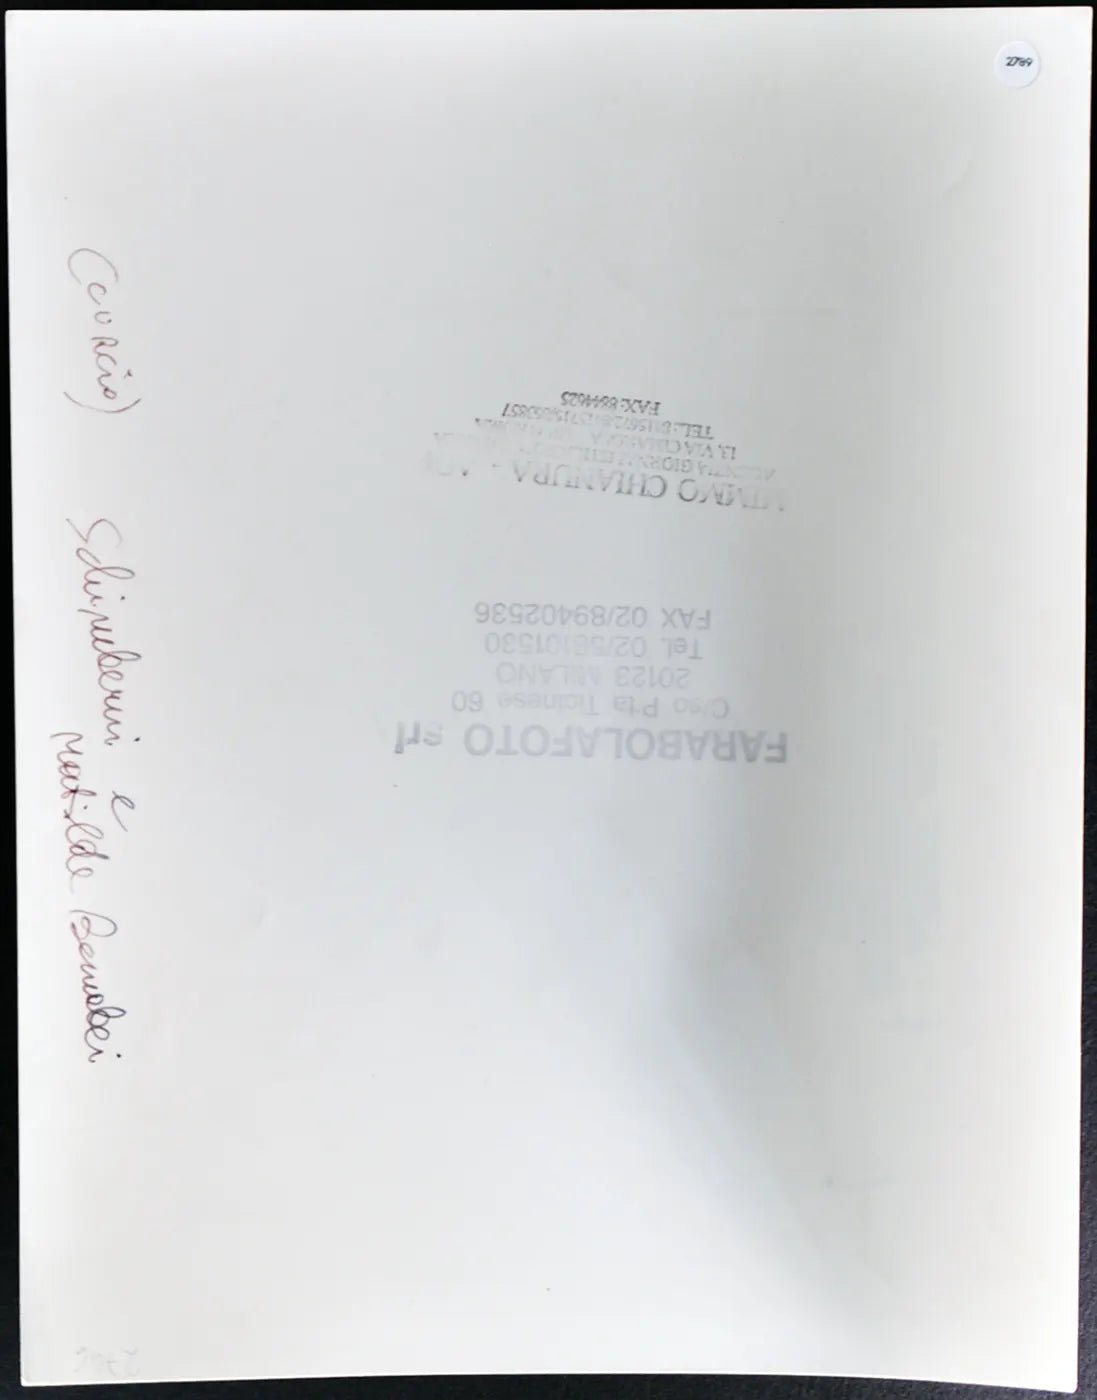 Bernabei e Schimberni anni 90 Ft 2789 - Stampa 24x30 cm - Farabola Stampa ai sali d'argento